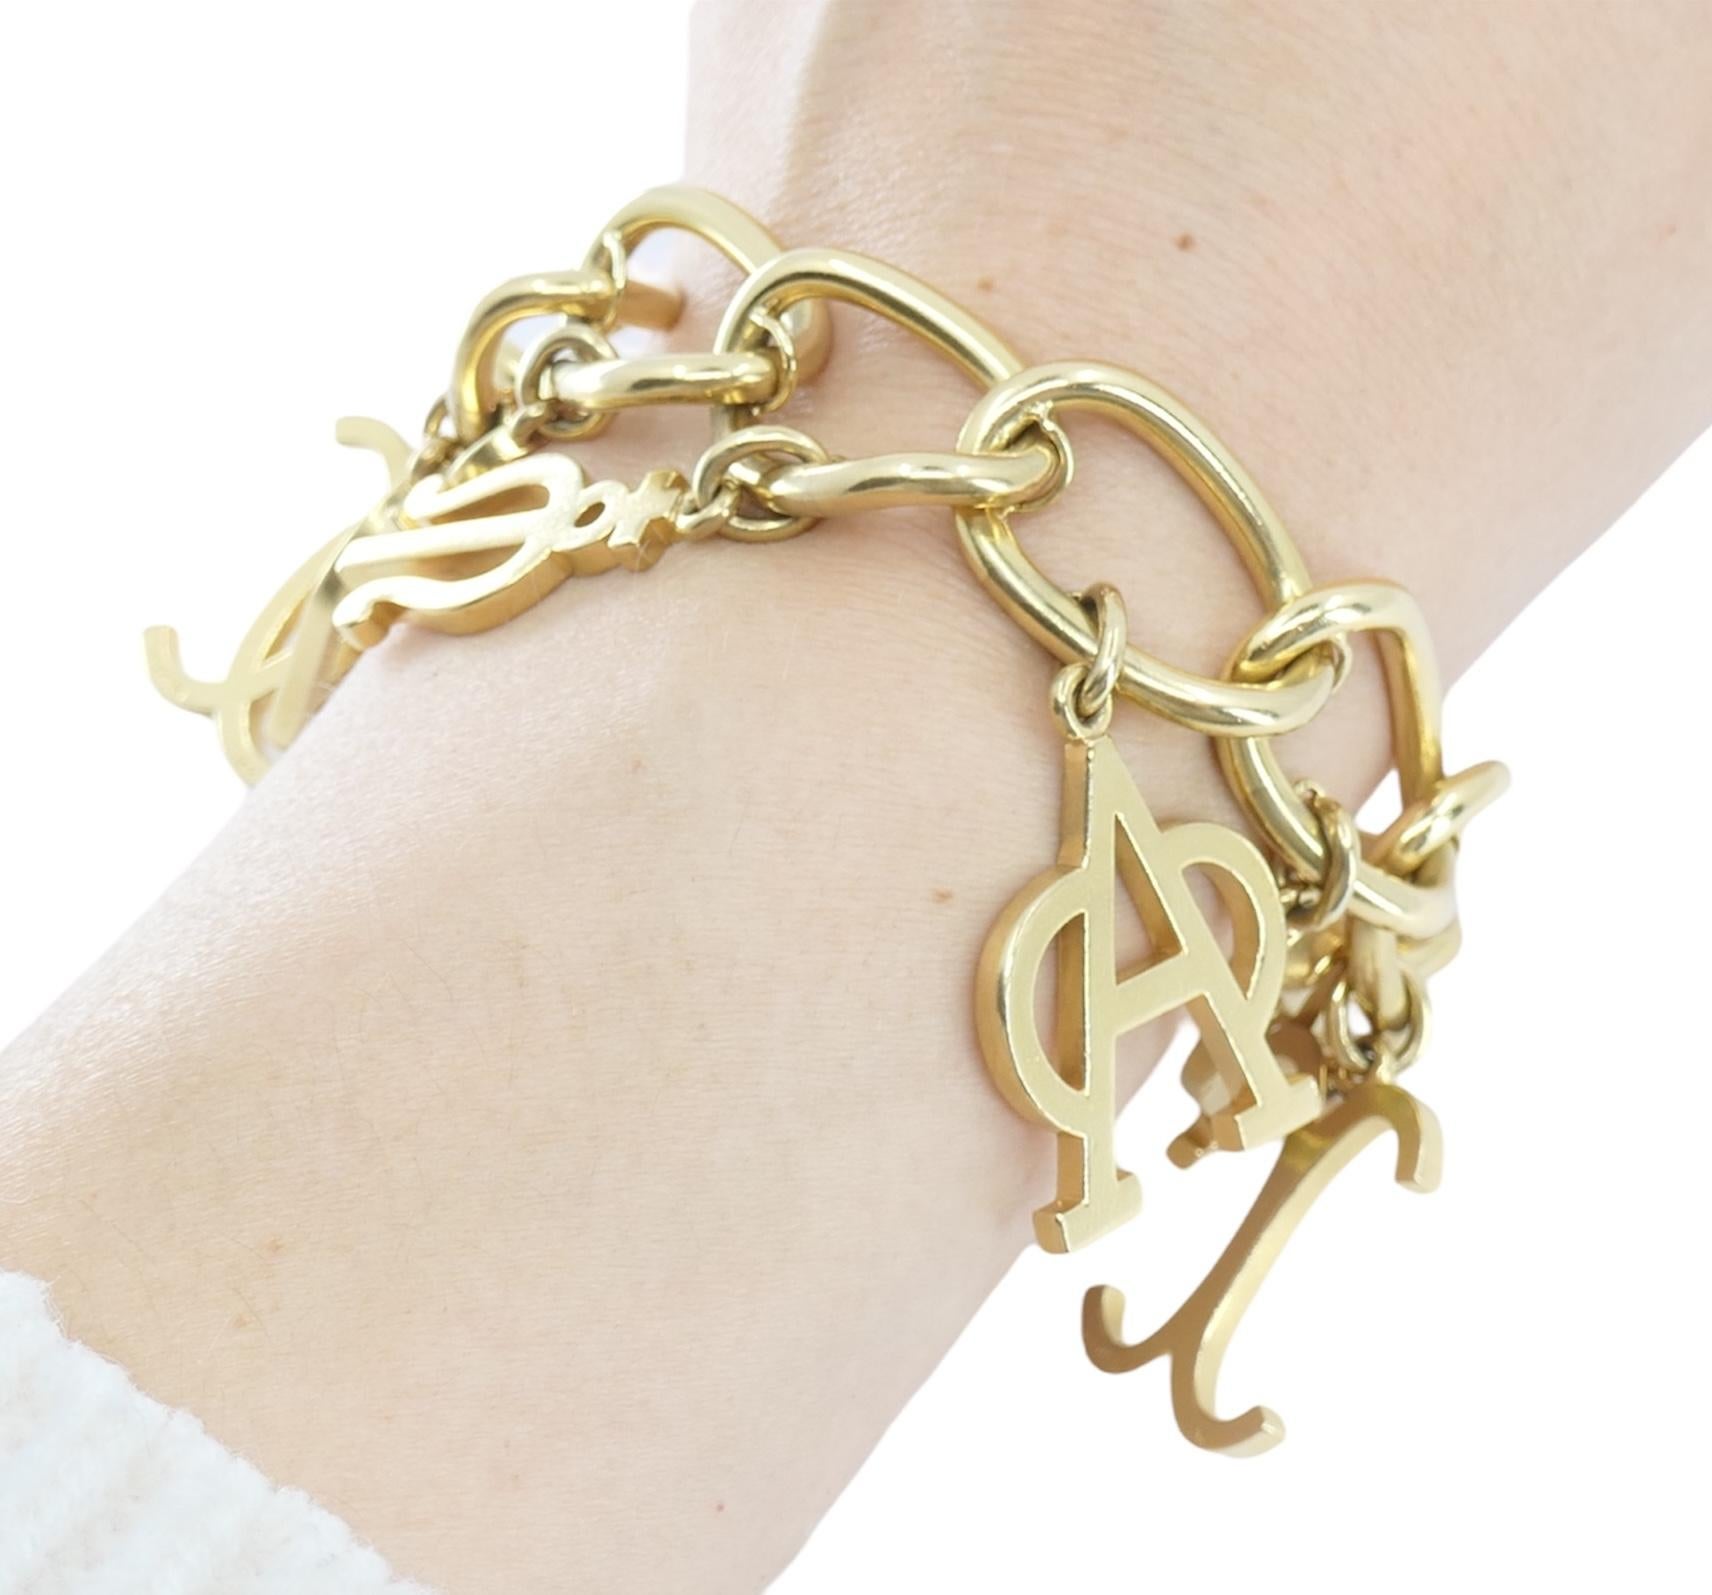 Cartier 14k Gold Charm Bracelet. 7.25